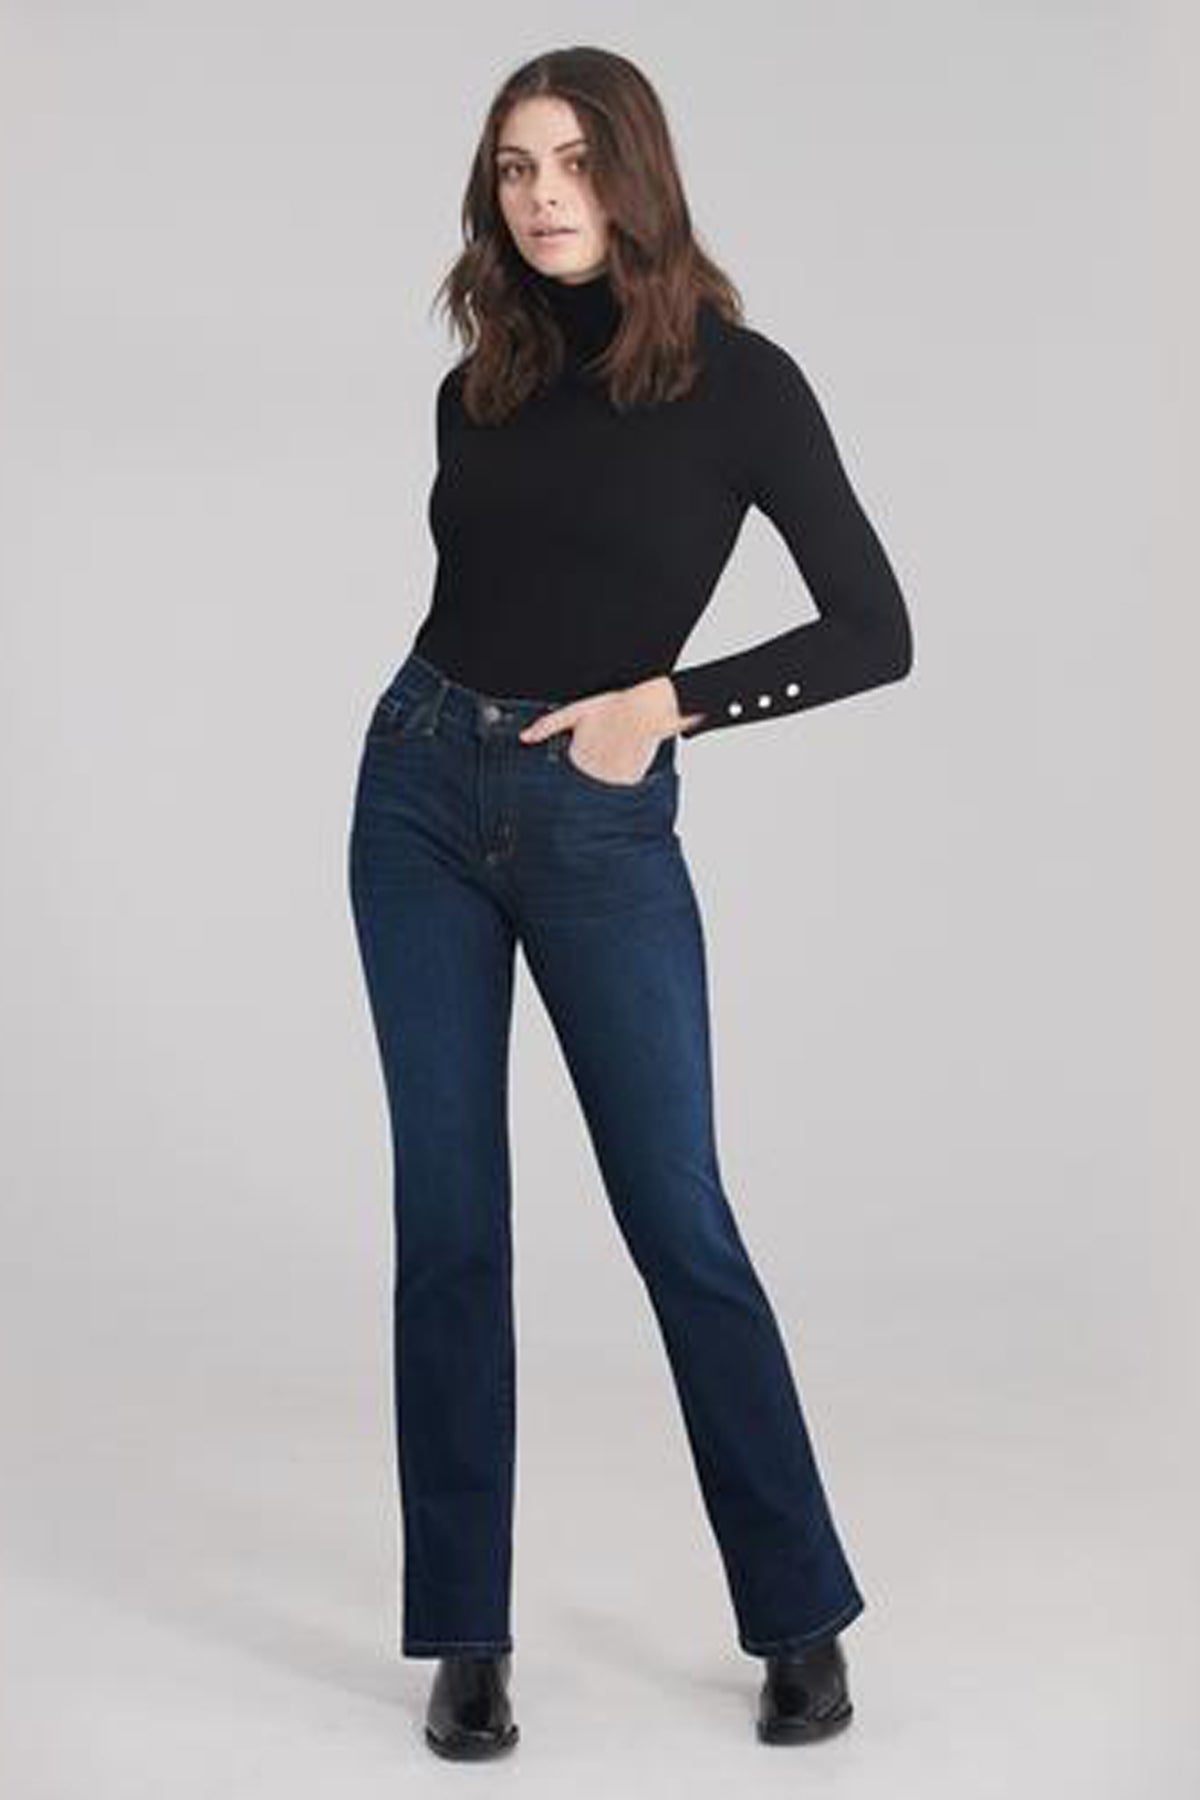 Classic Rise Straight Yoga Jean, Namaste, classic rise waist, straight cut, 32 inch inseam, sizes 24-34, made in Canada